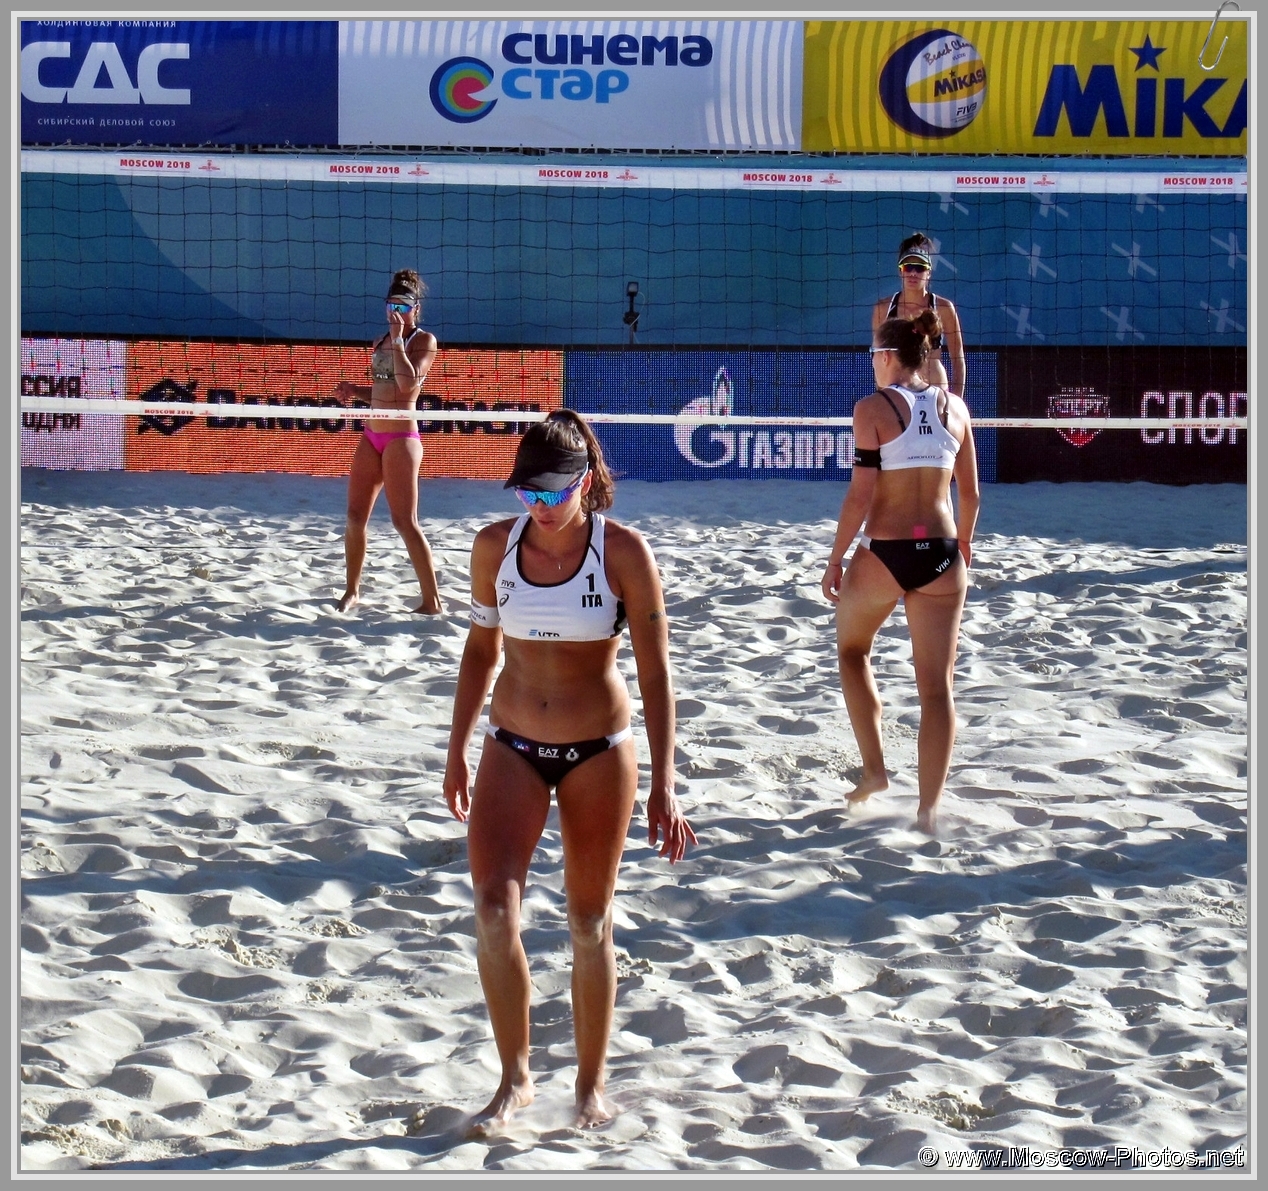 Marta Menegatti and Viktoria Orsi Toth - Italian Team at FIVB Beach Volleyball World Tour in Moscow 2018